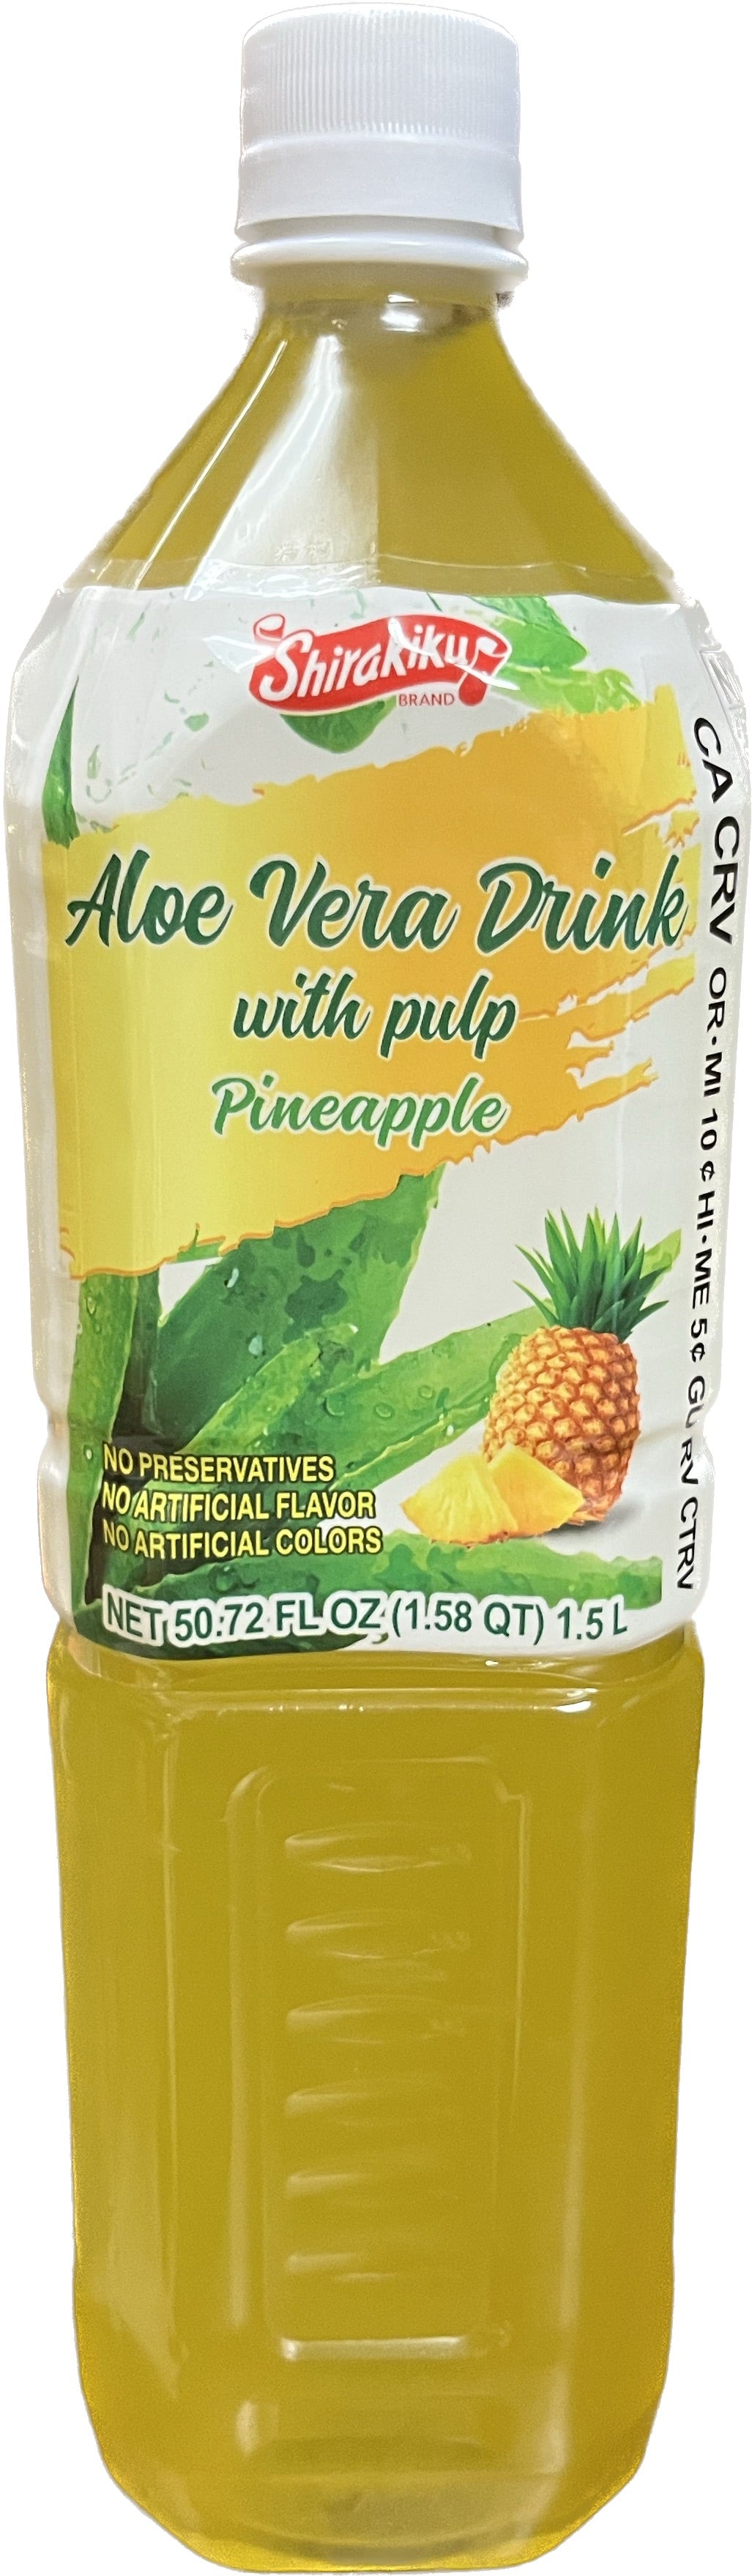 Shirakiku Piña Aloe Vera Bebida con pulpa - 1.5L